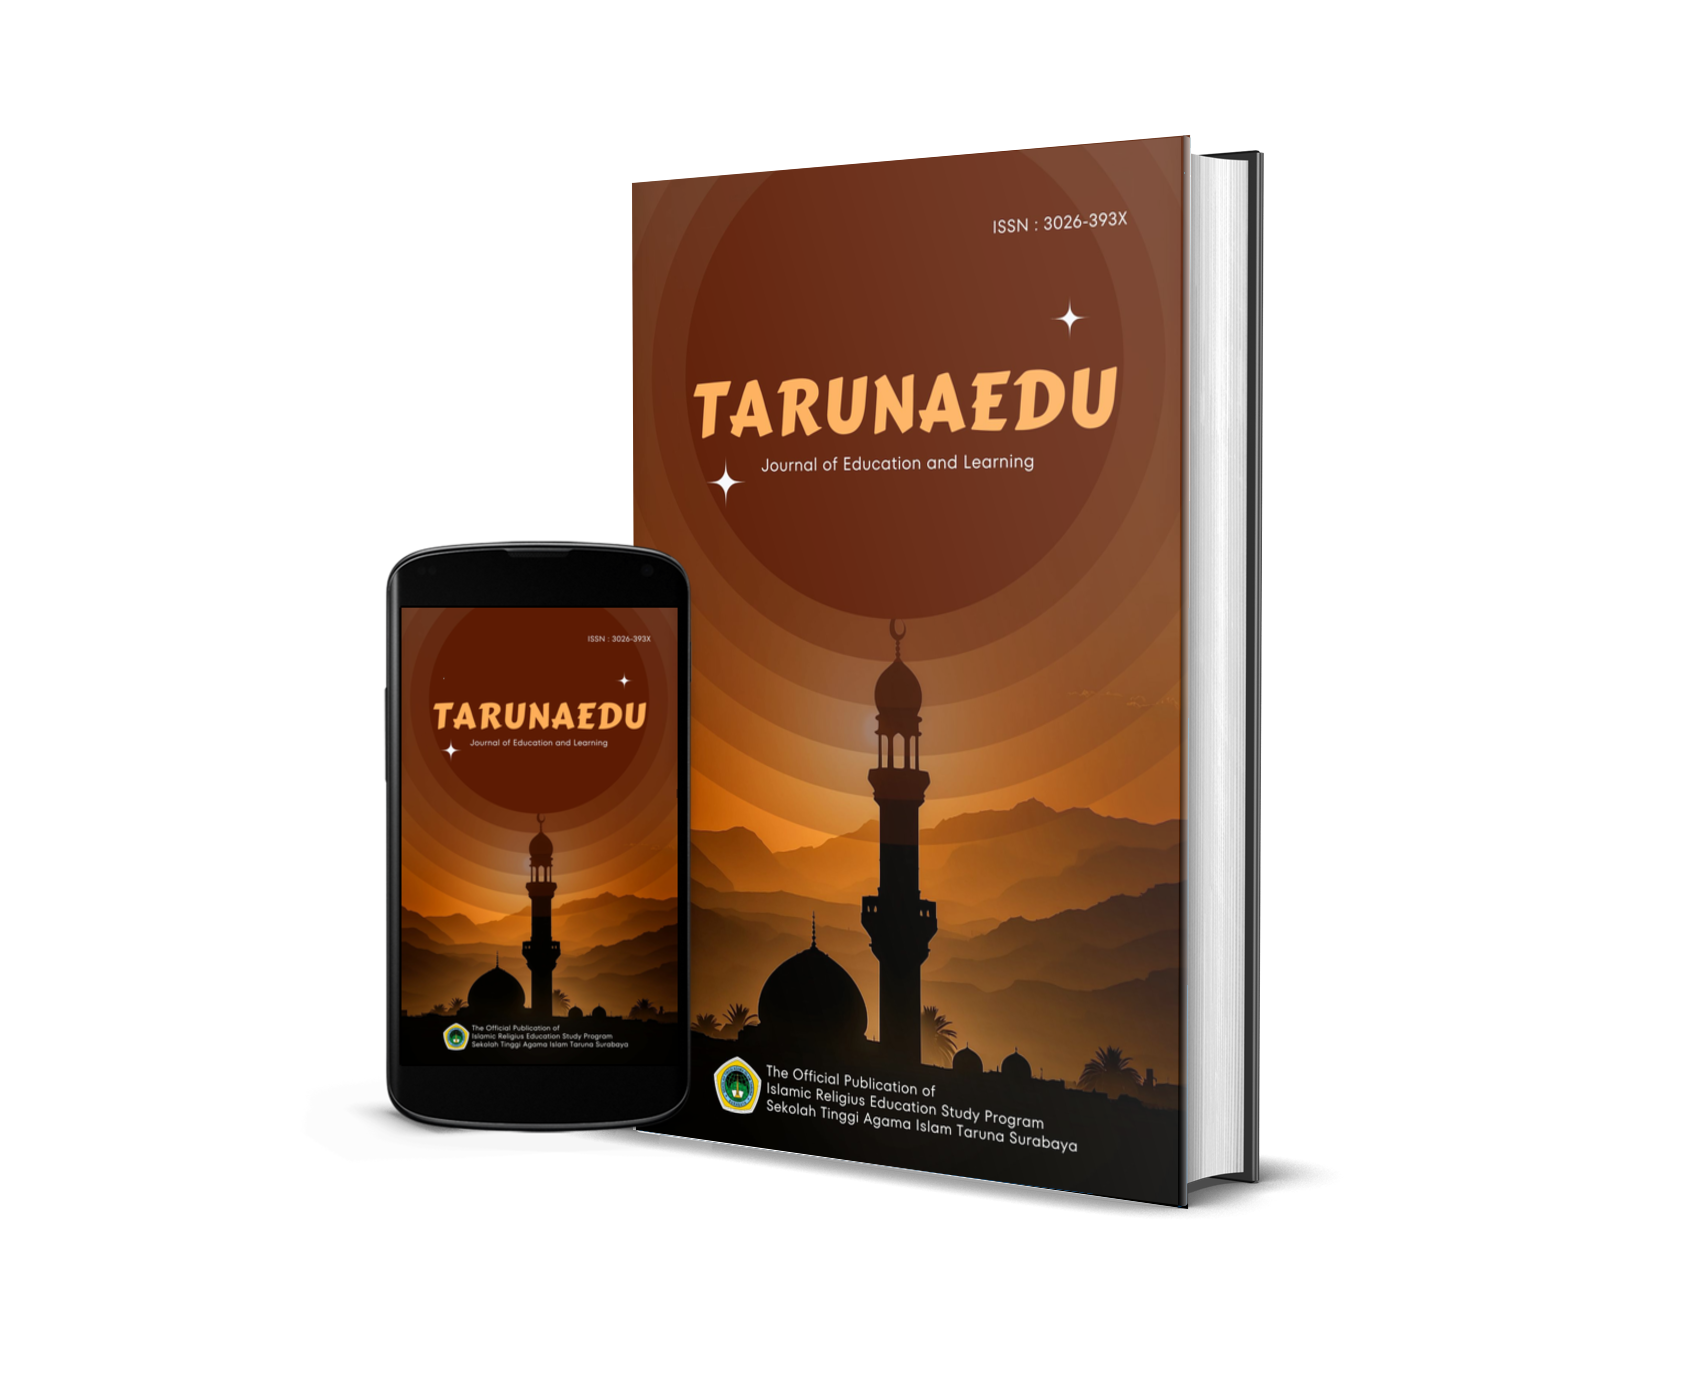 TARUNAEDU: Journal of Education and Learning